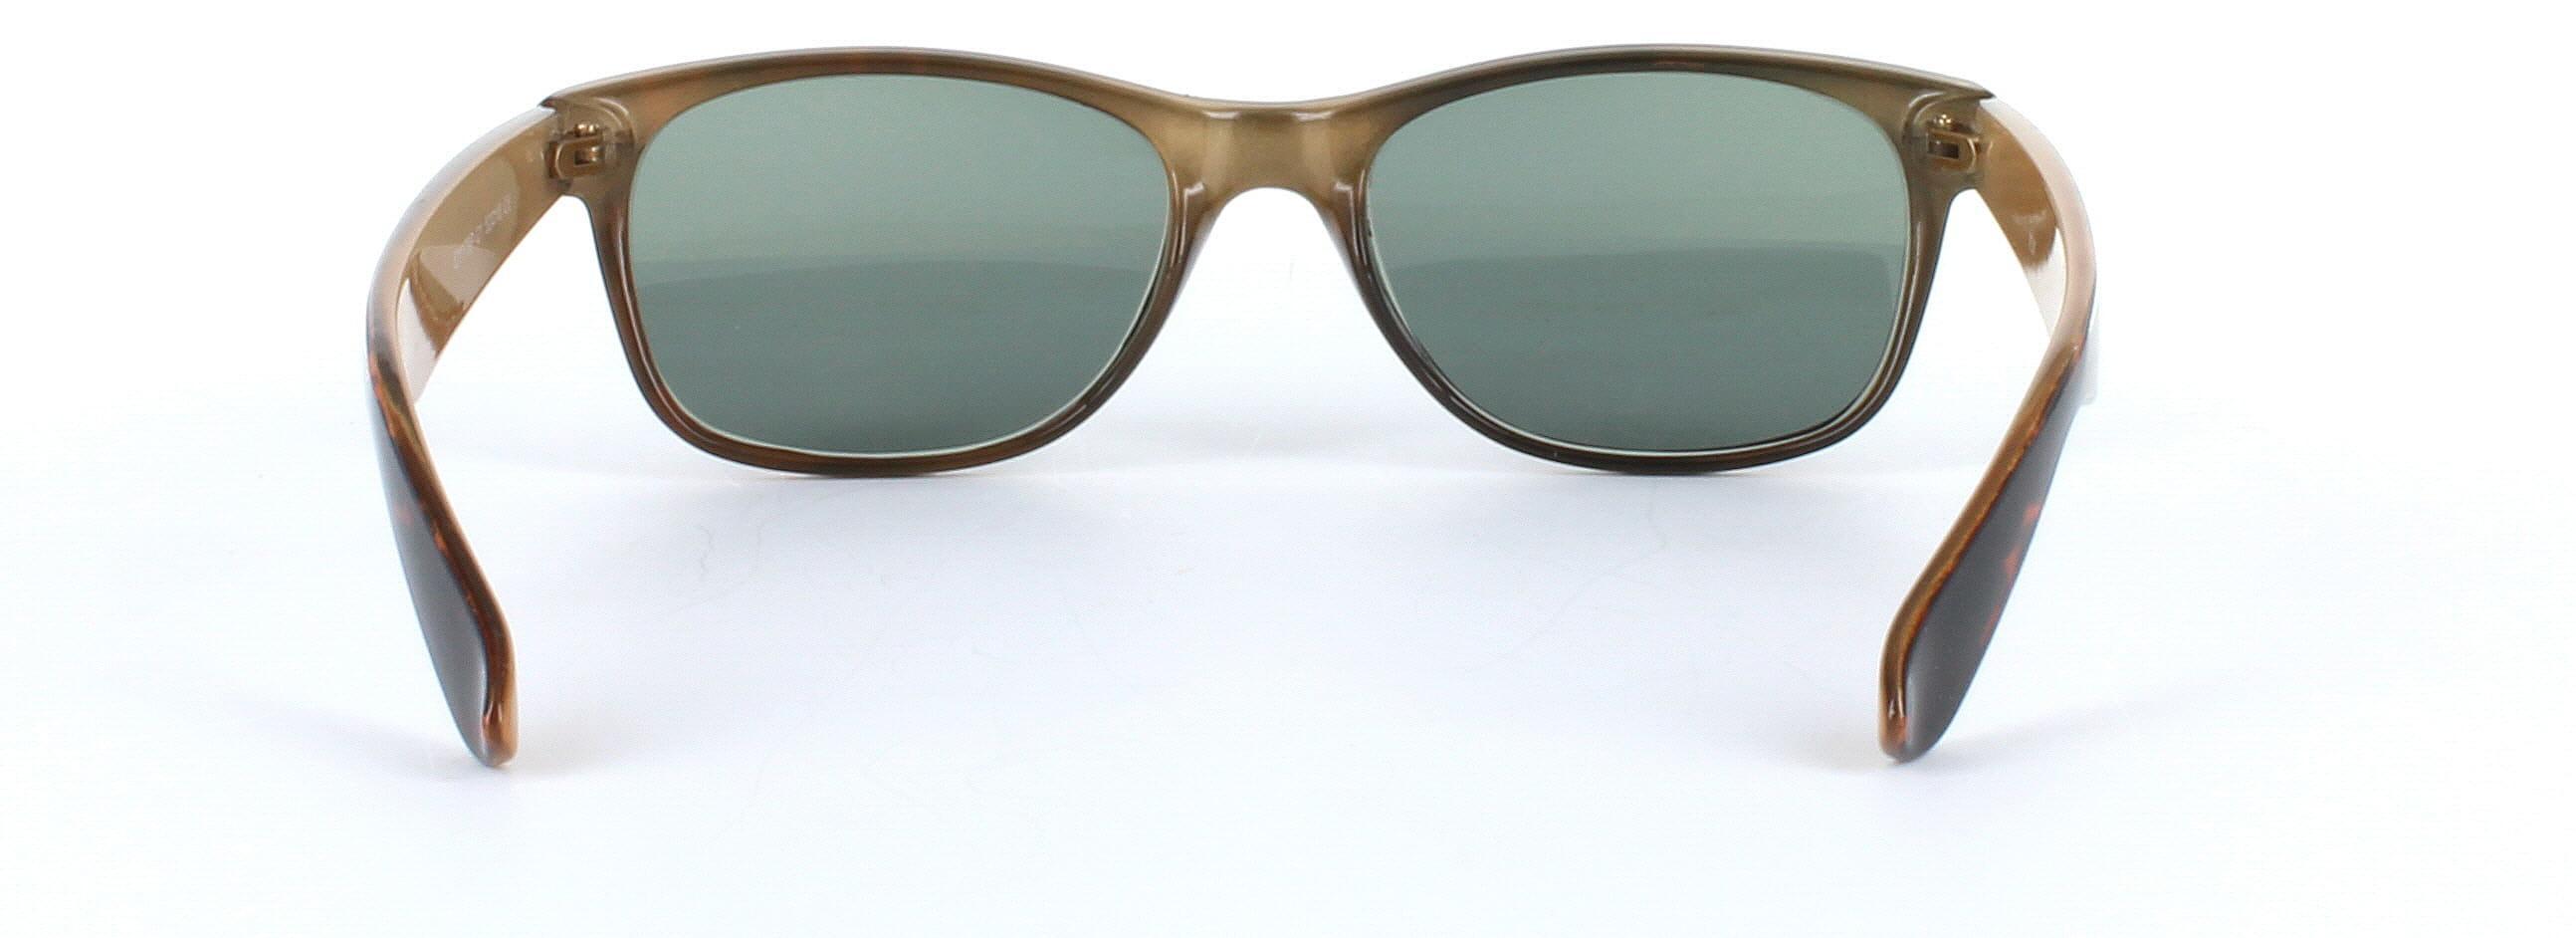 Lester Tortoise Full Rim Oval Plastic Prescription Sunglasses - Image View 3